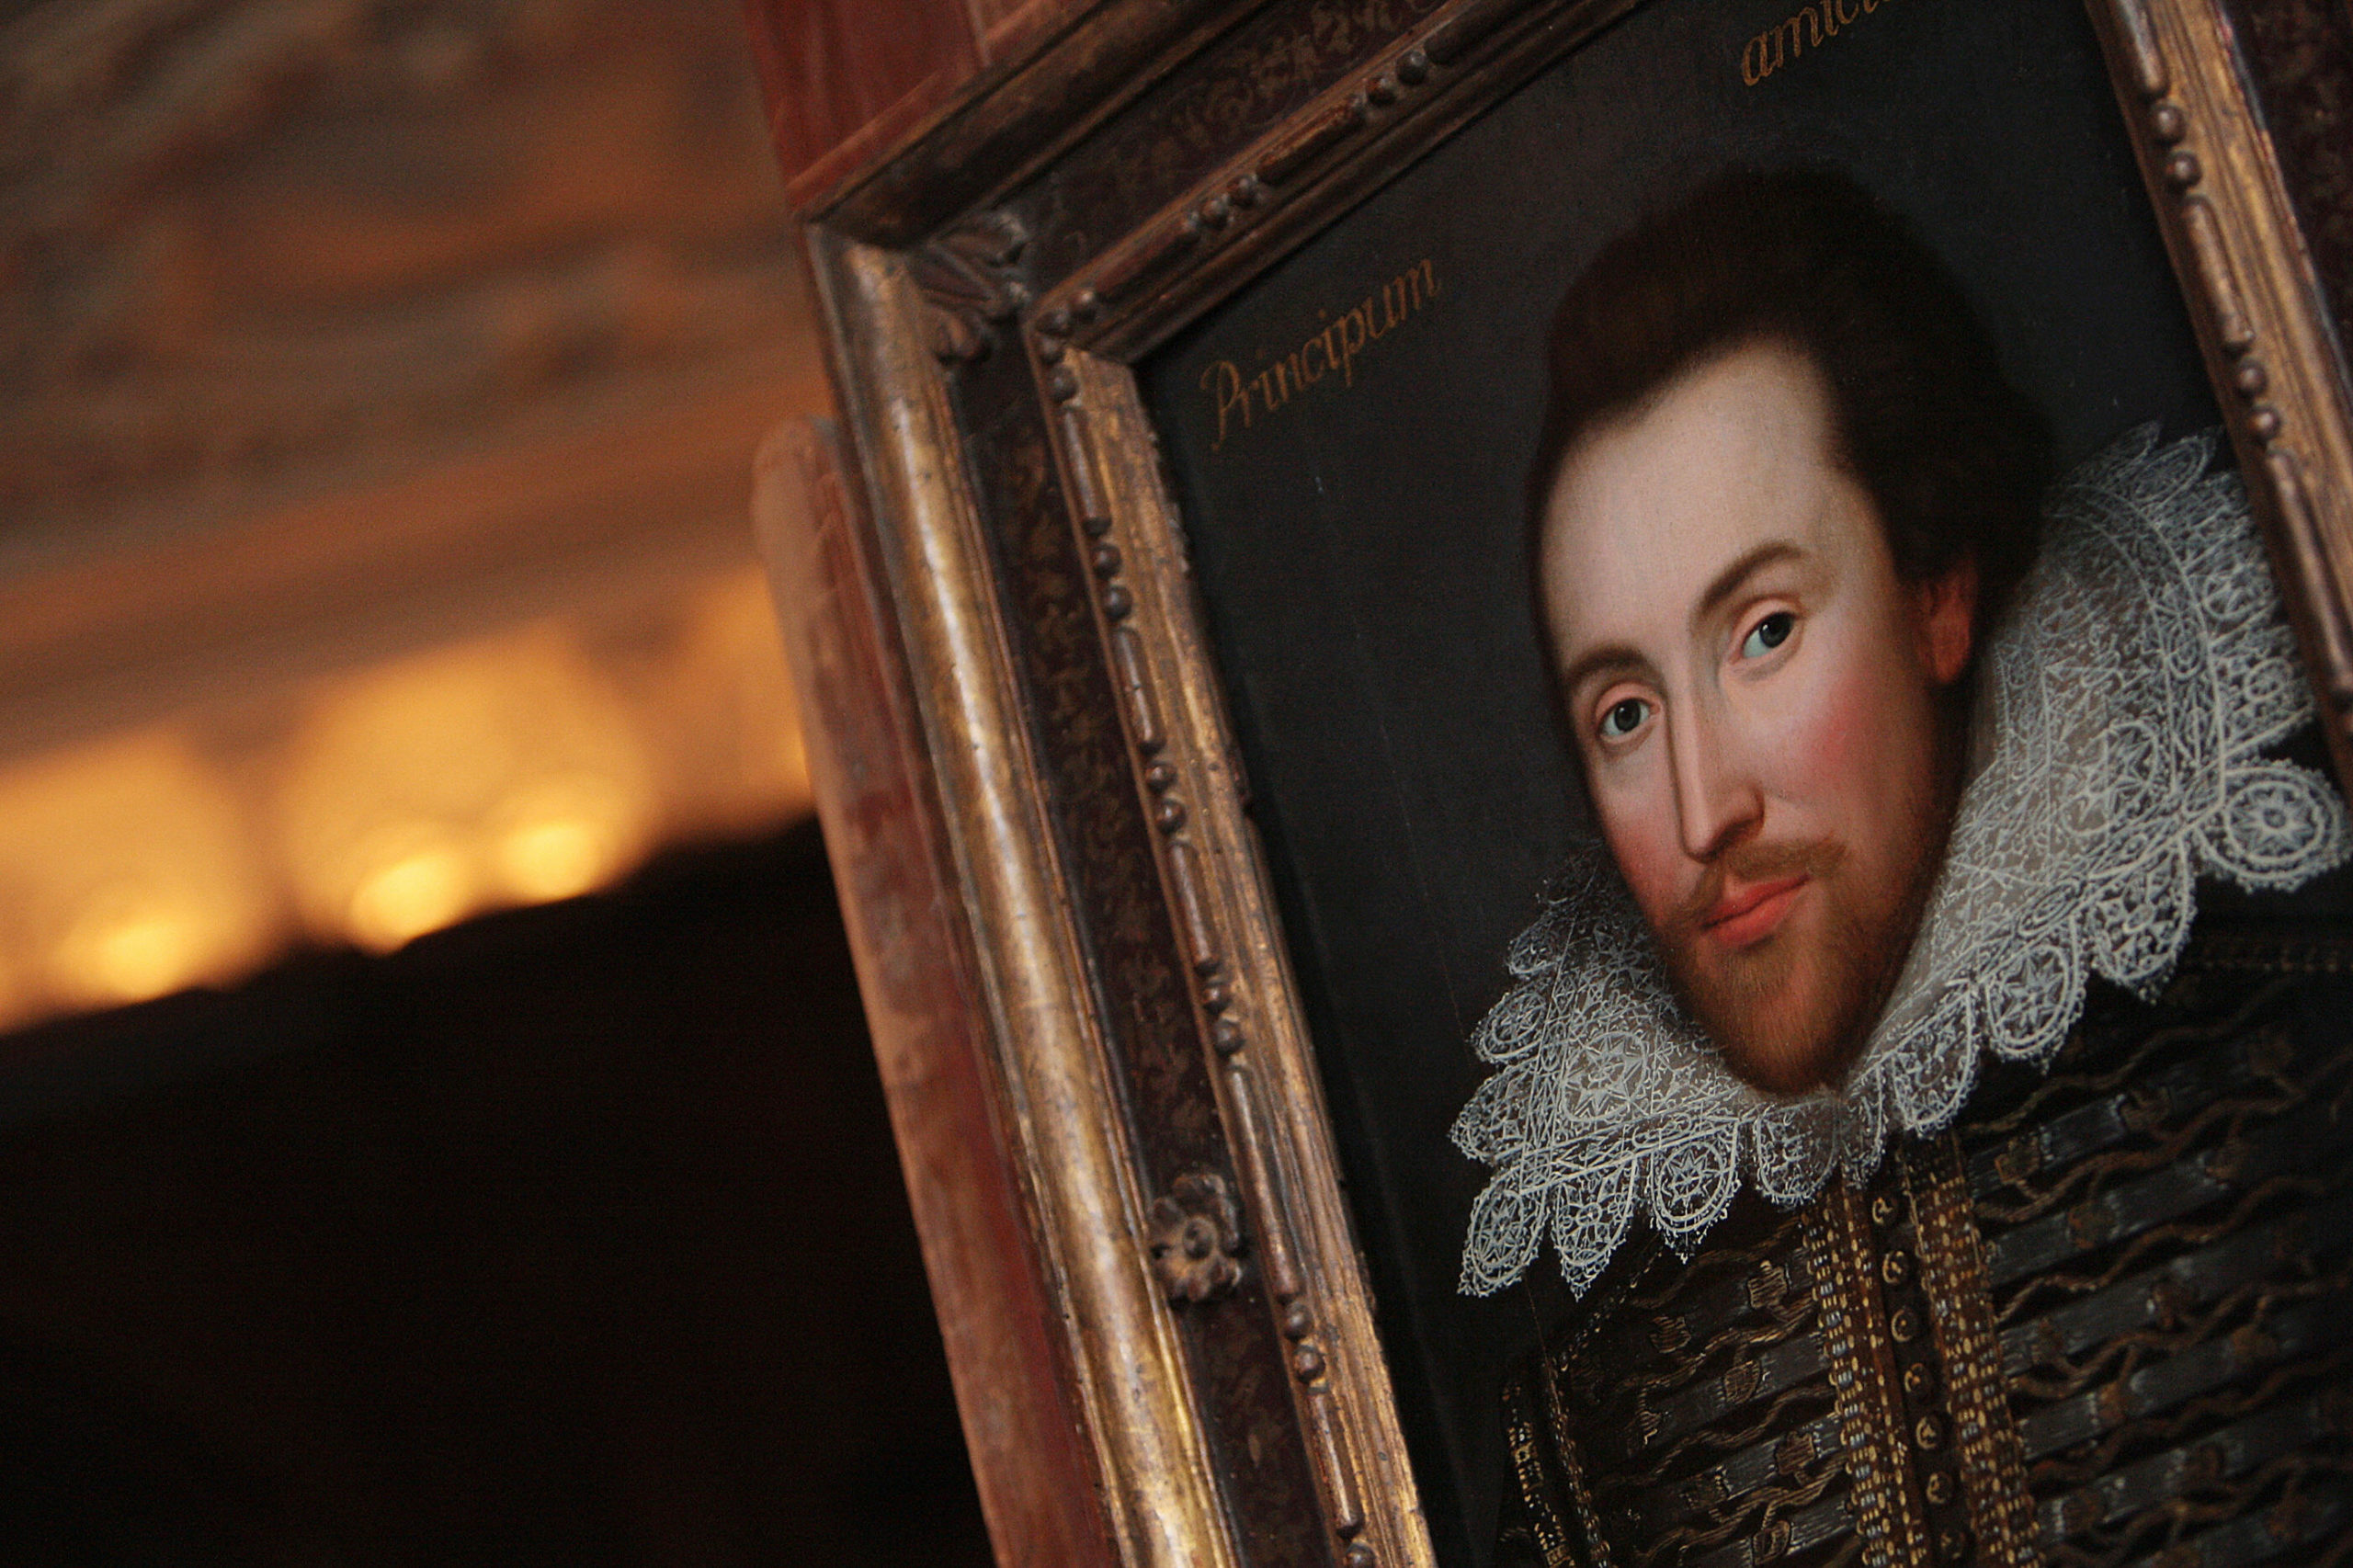 A portrait of William Shakespeare